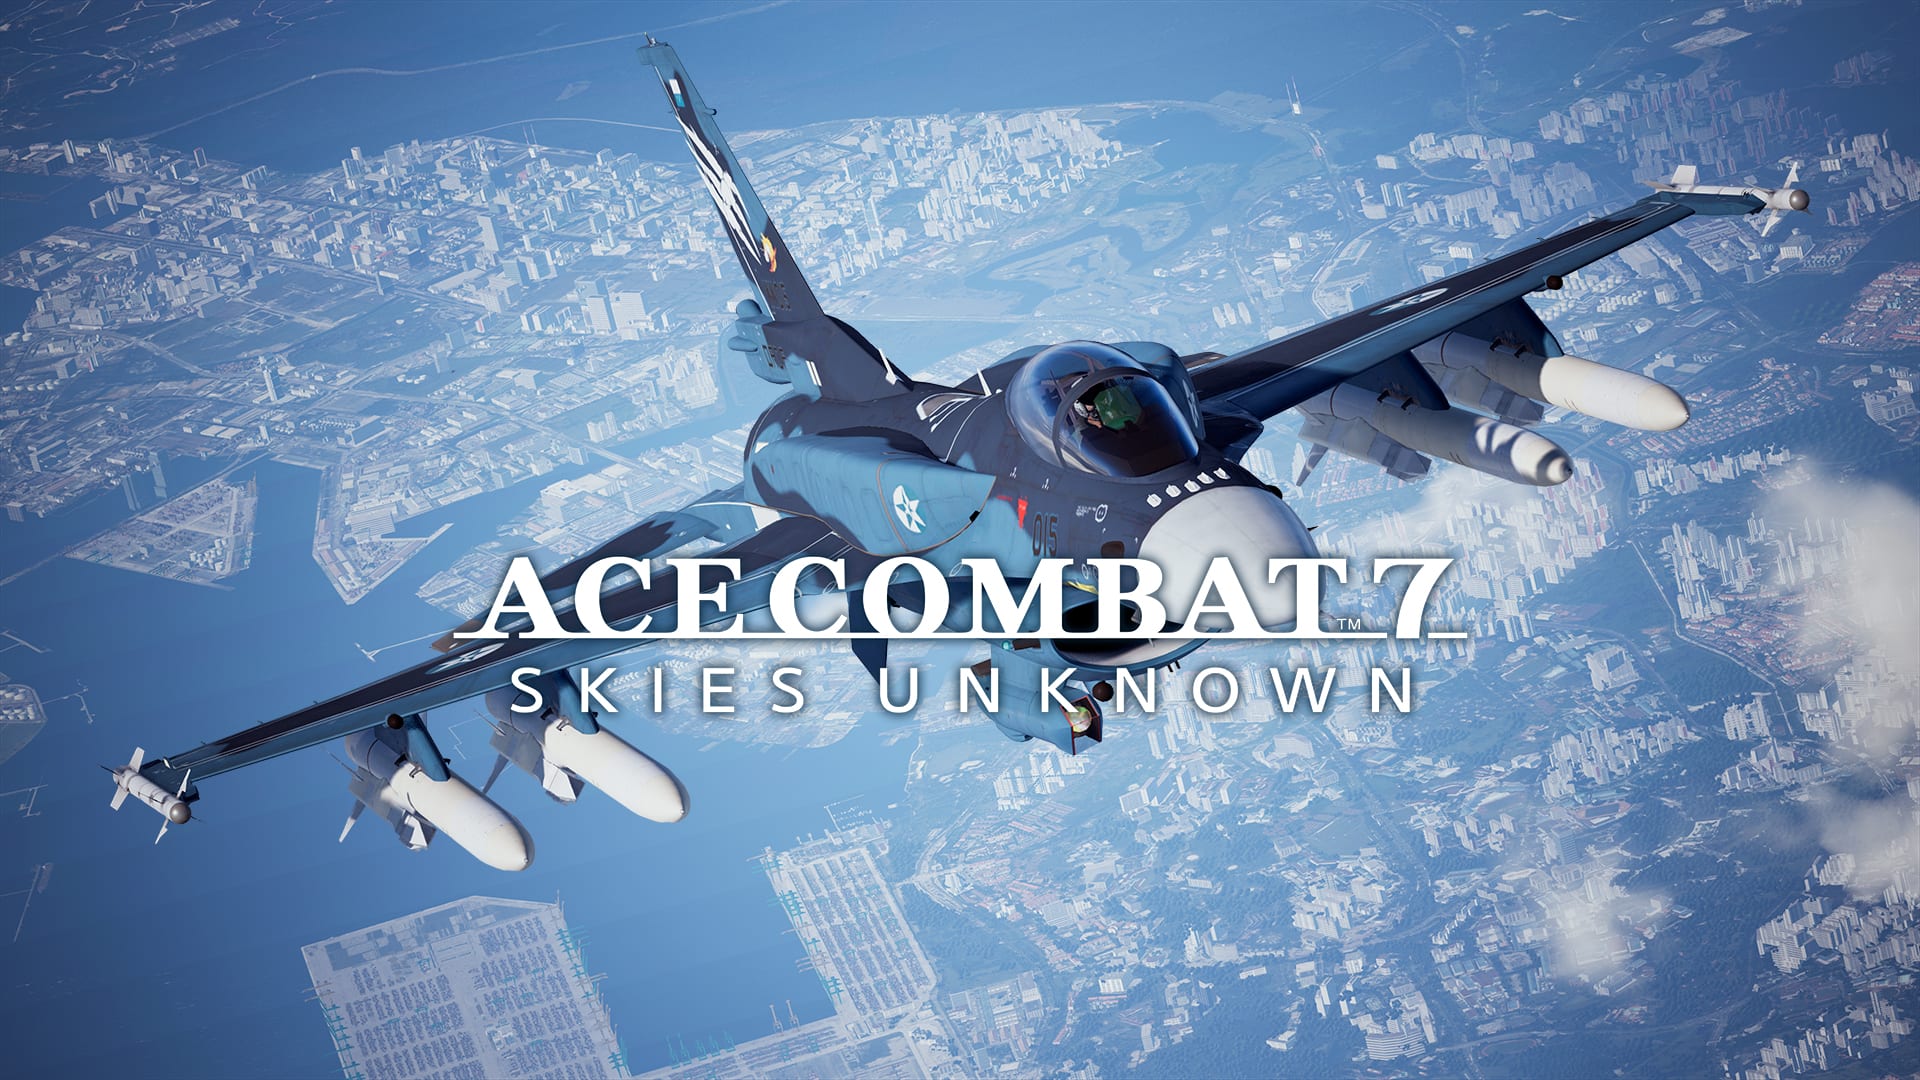 ACE COMBAT™7: SKIES UNKNOWN - Ensemble F-2A -Super Kai-